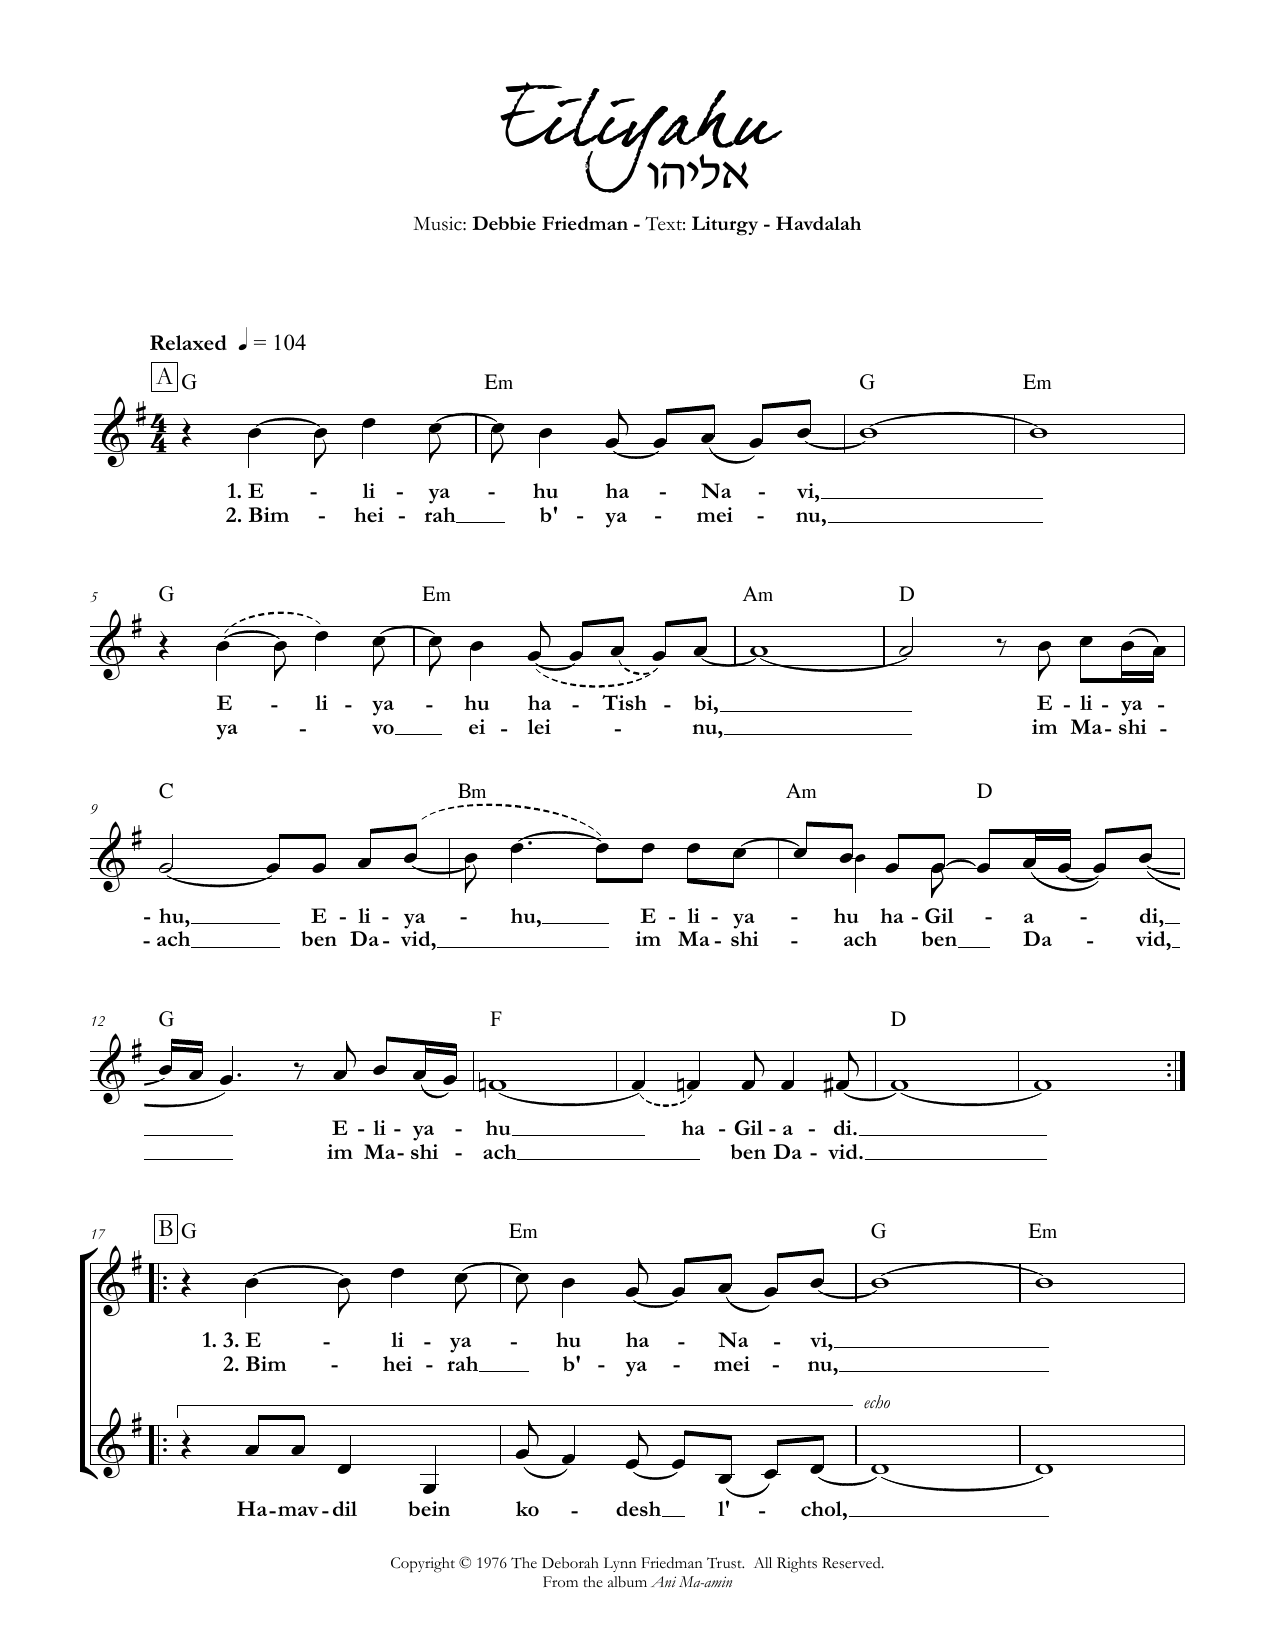 Debbie Friedman Eiliyahu Sheet Music Notes & Chords for Lead Sheet / Fake Book - Download or Print PDF